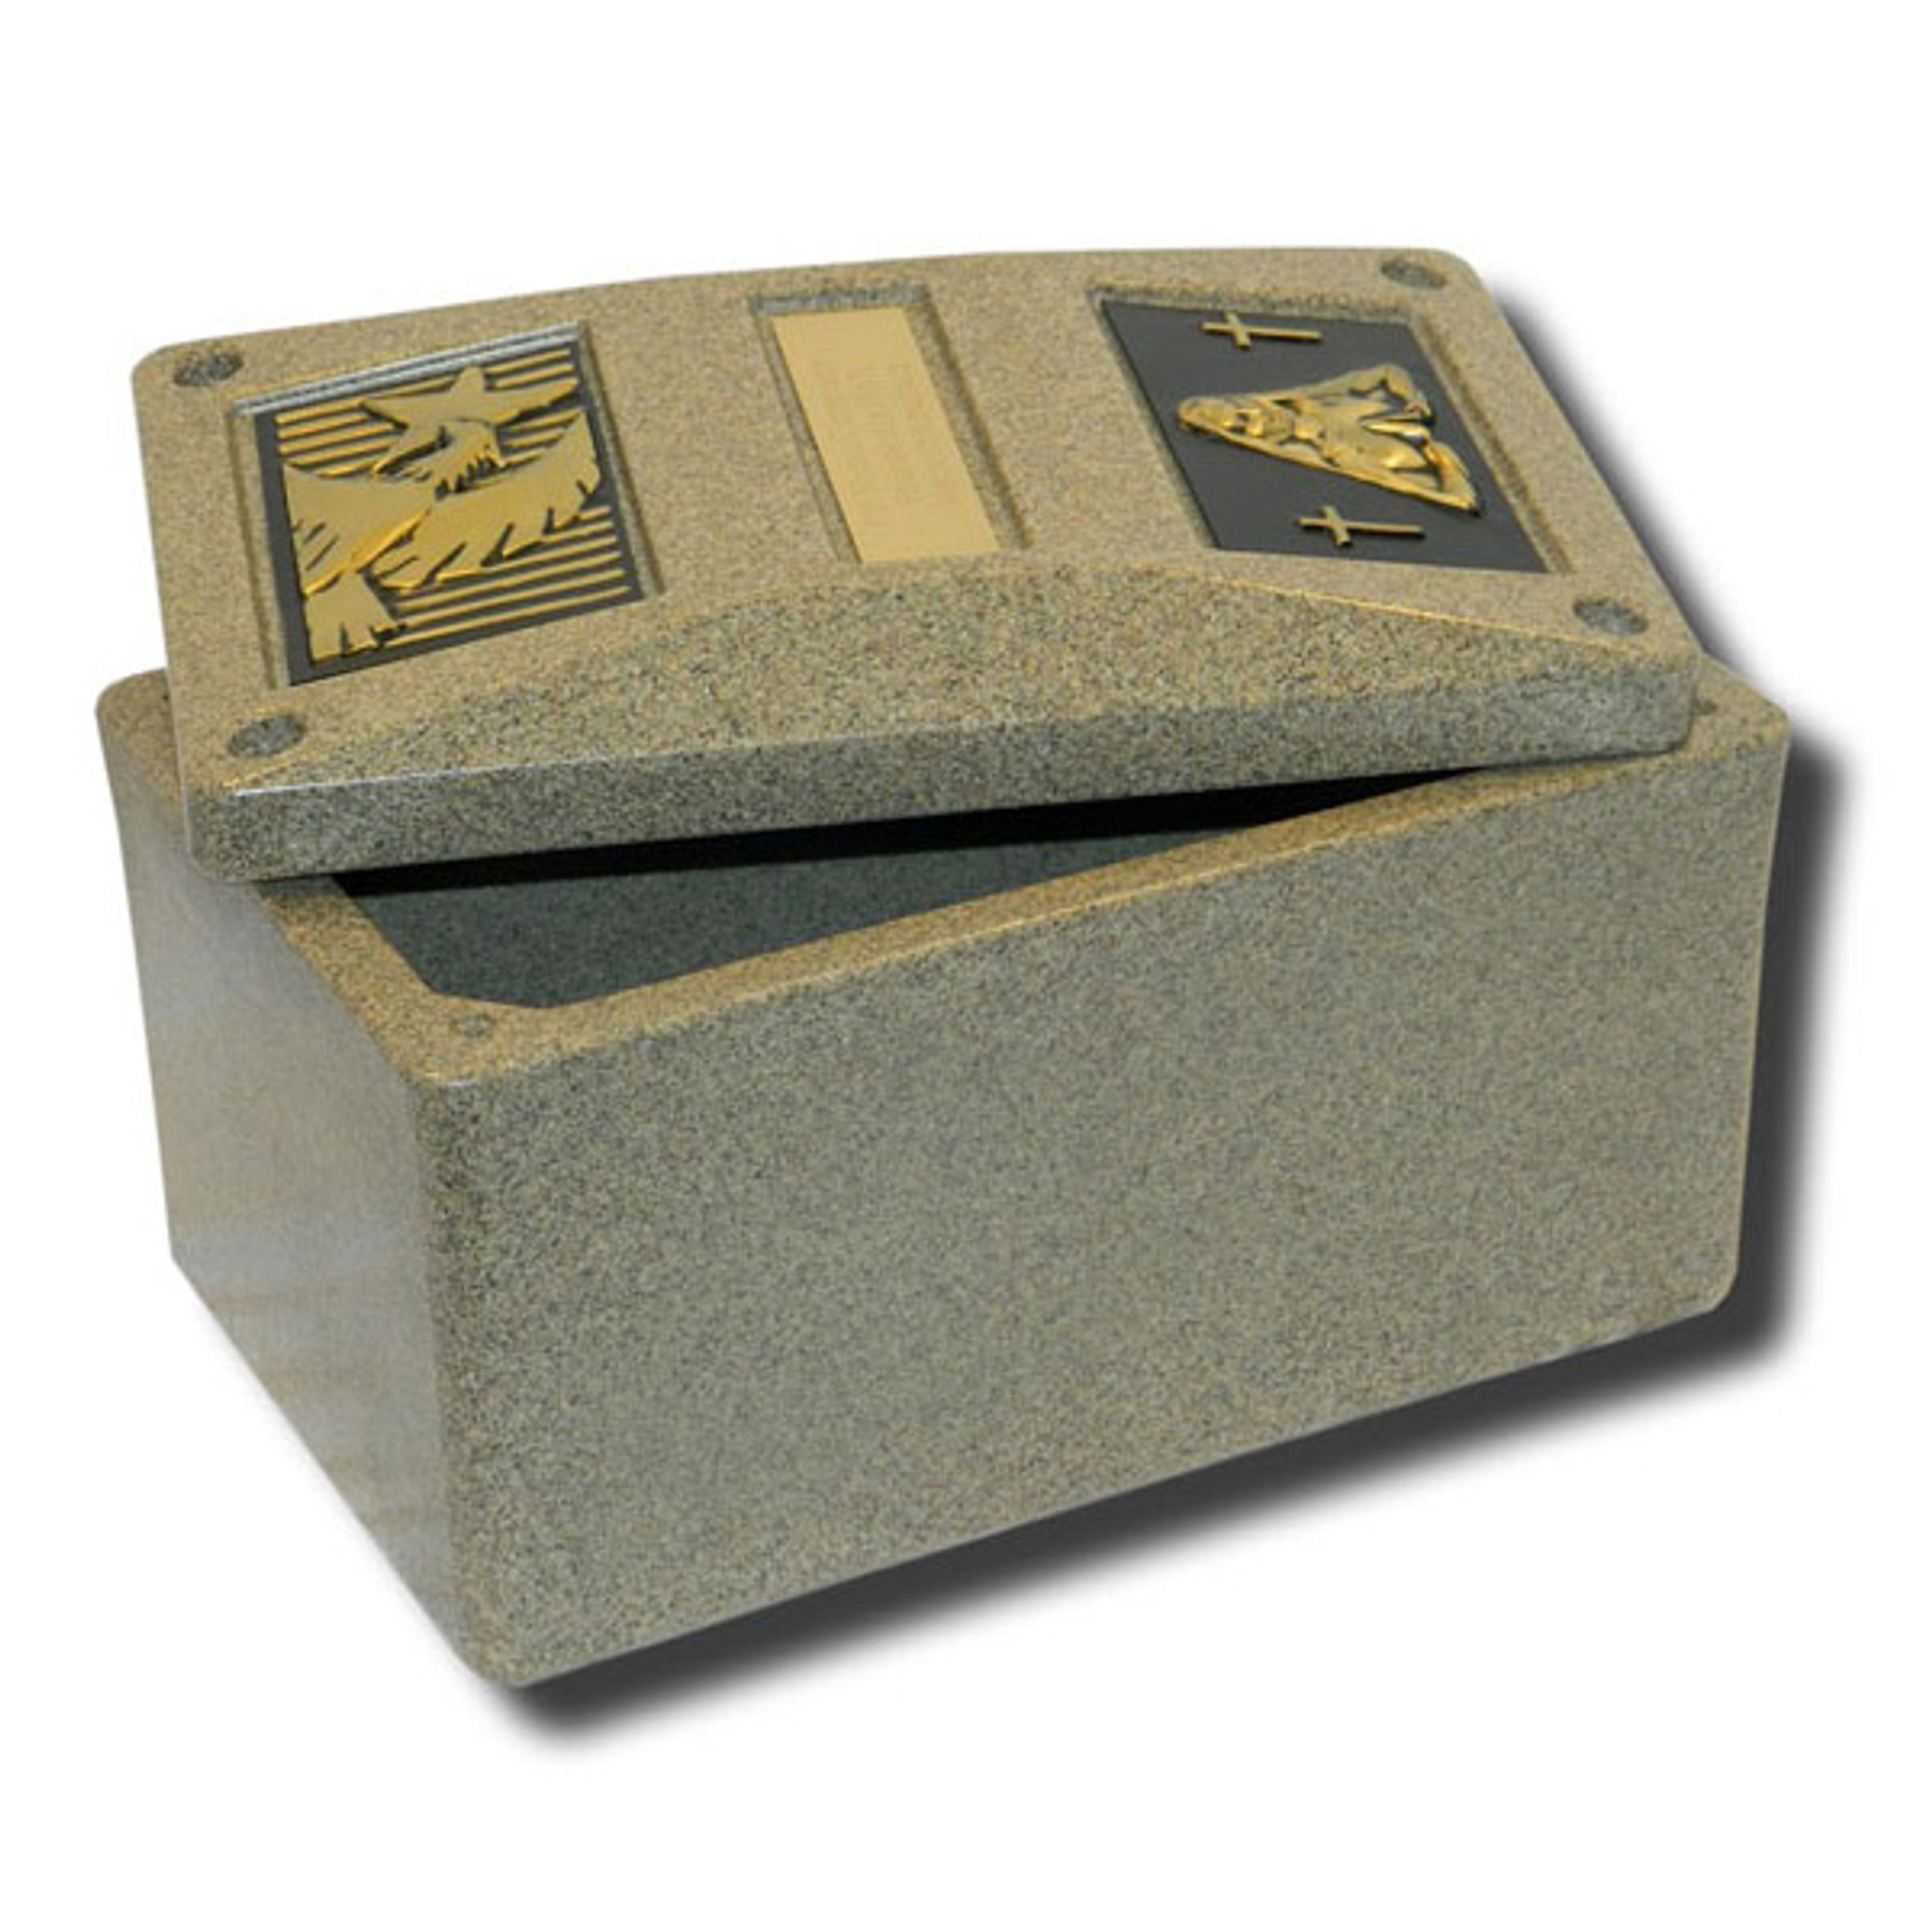 Urn Vault Champion Sandstone-Cross Engraved Name Plate Included 